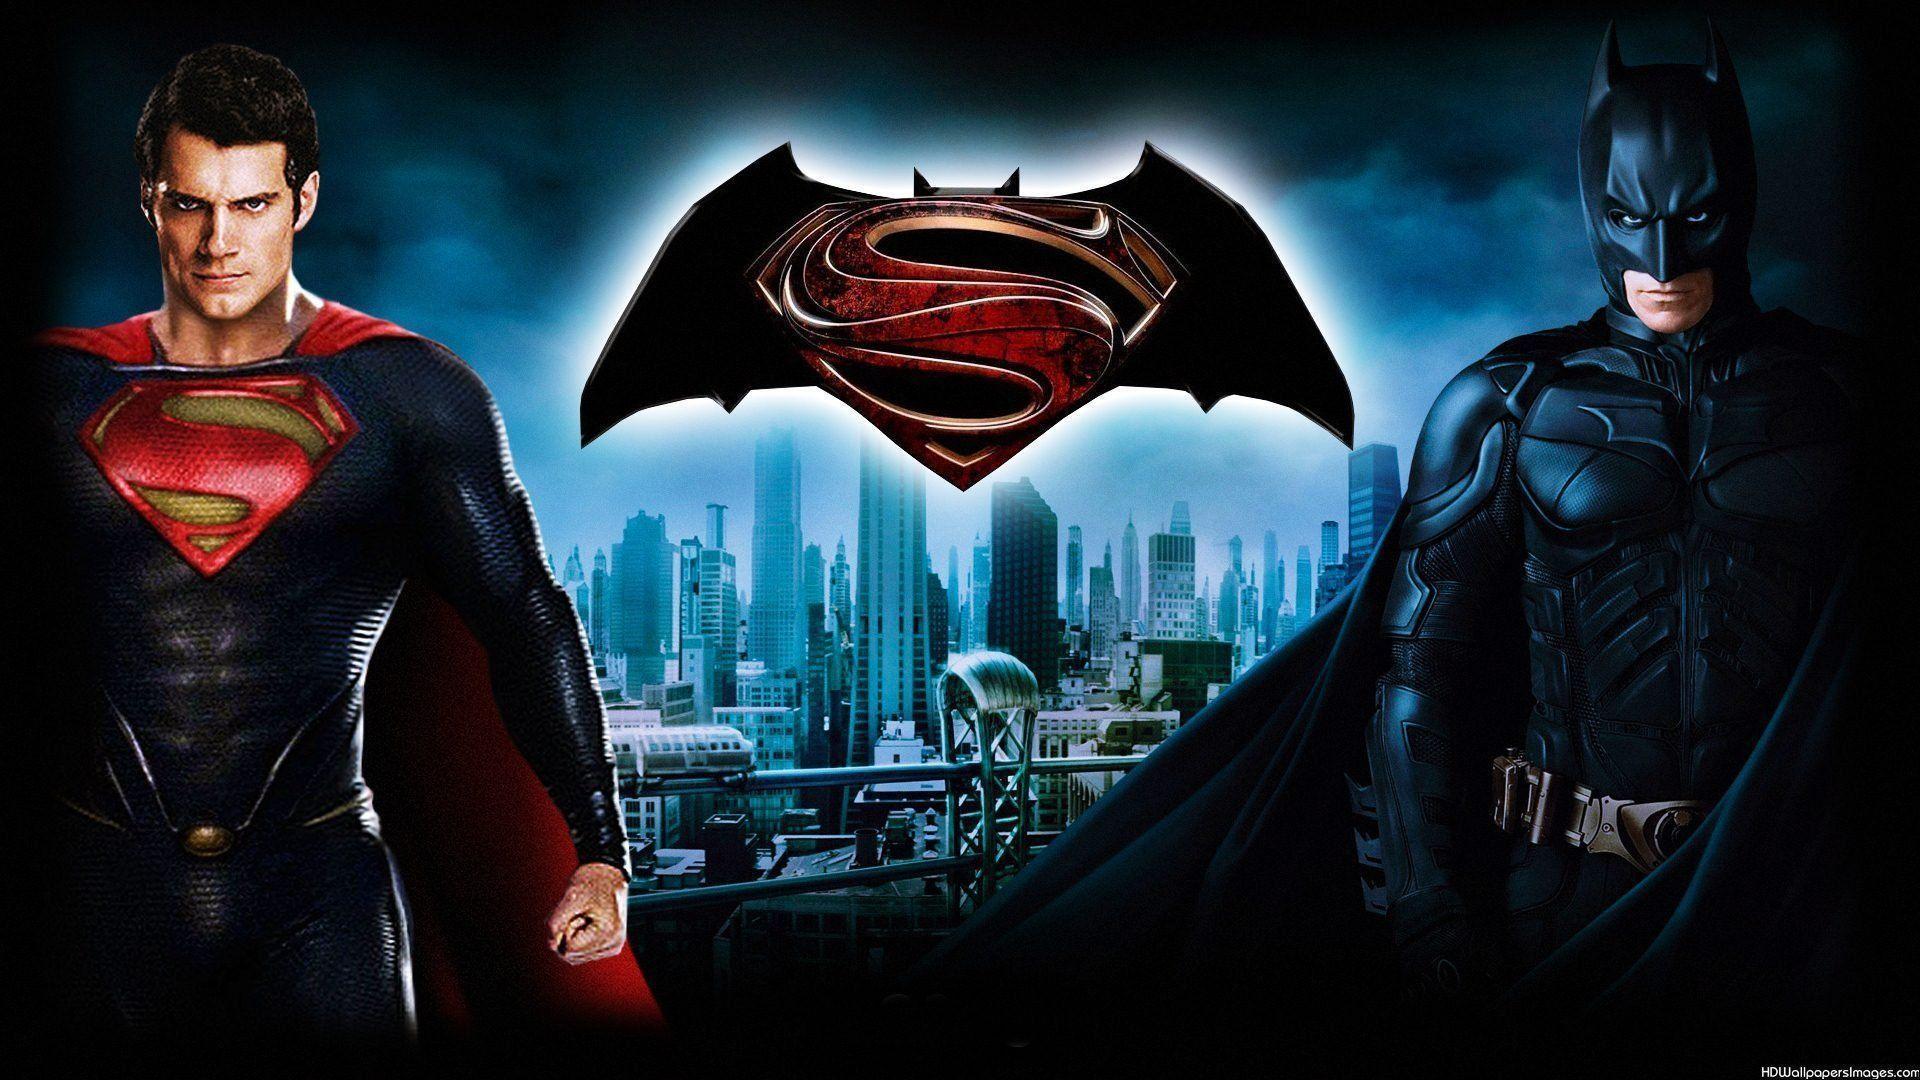 Batman V Superman 2015 Movie Image. HD Wallpaper Image